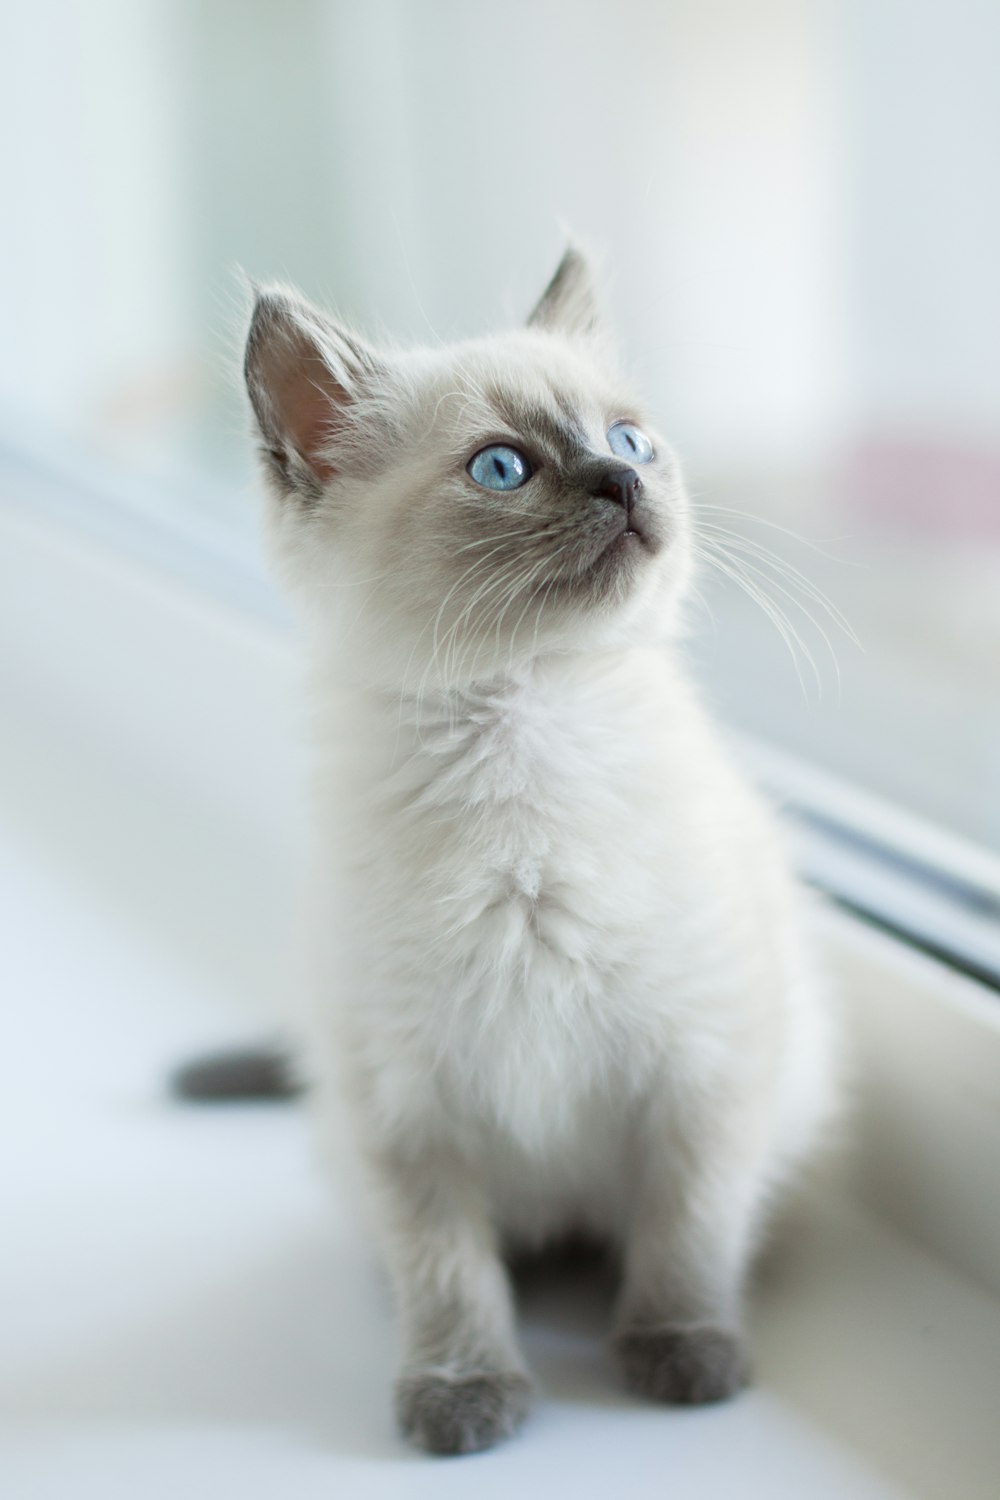 Blue Cat Pictures | Download Free Images On Unsplash